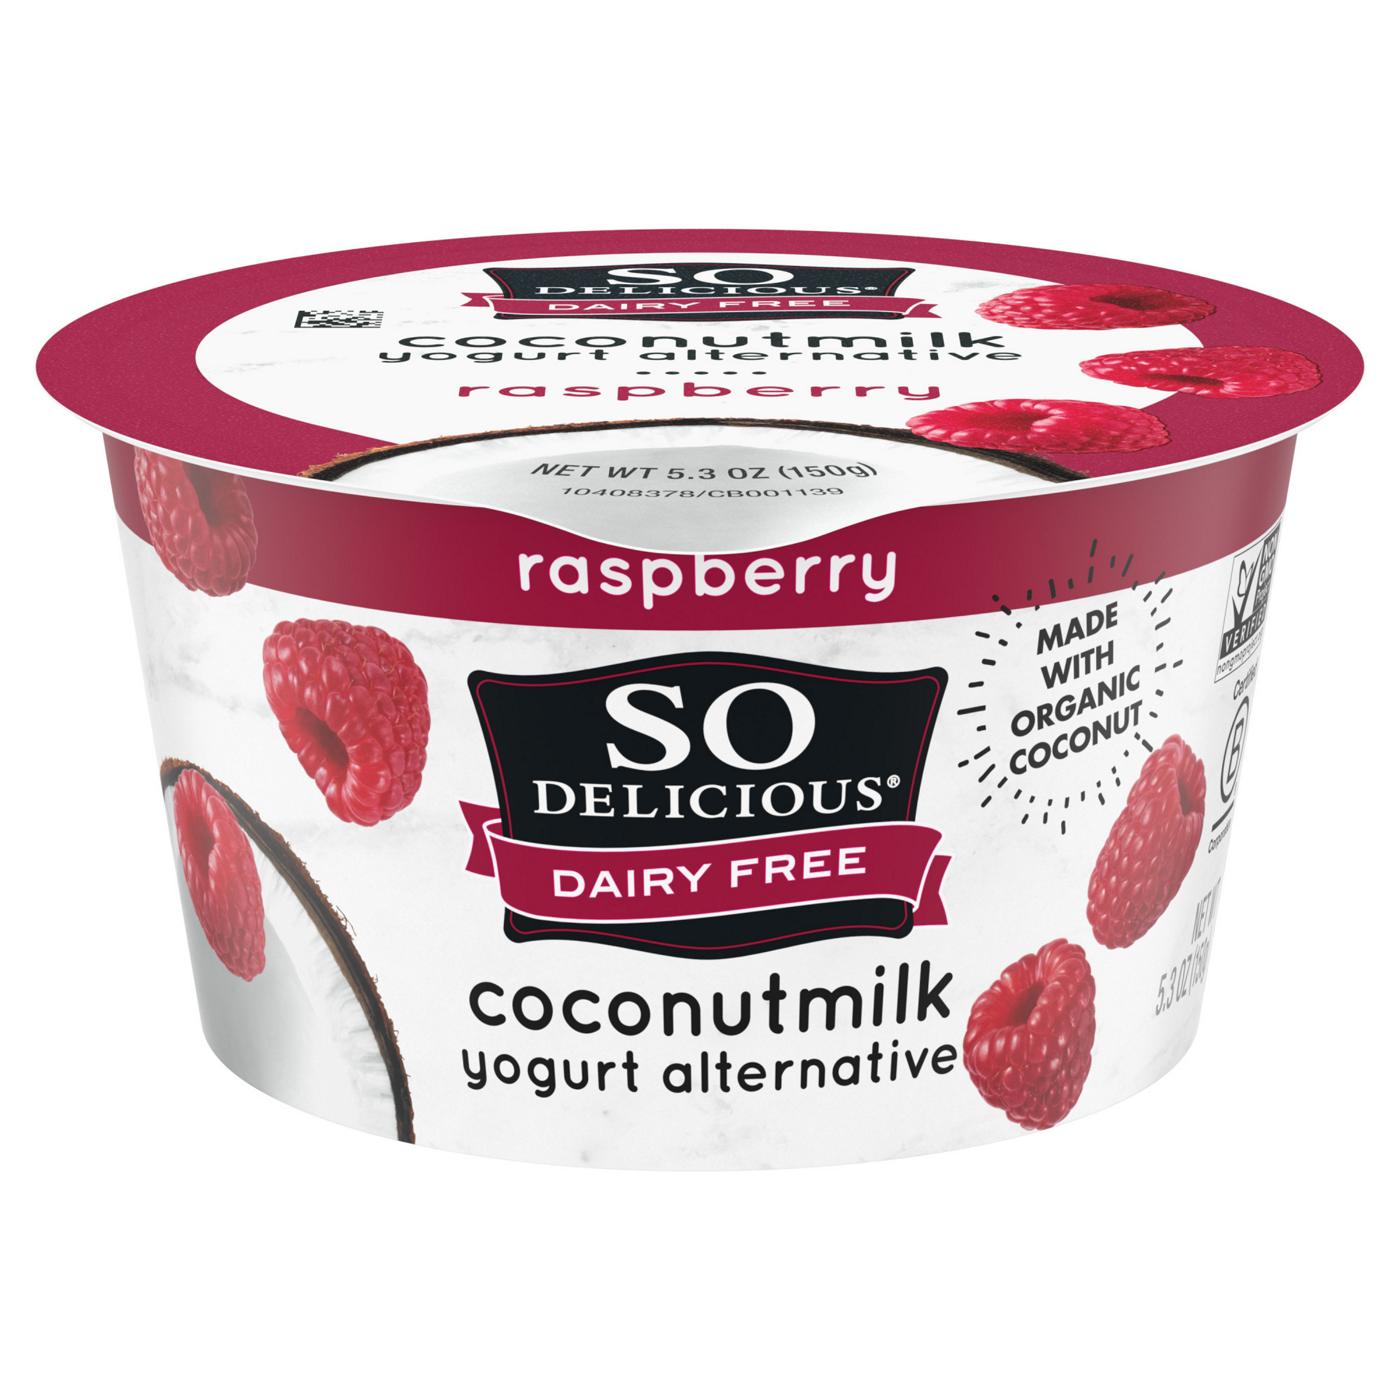 So Delicious Dairy Free Raspberry Coconutmilk Yogurt; image 1 of 8